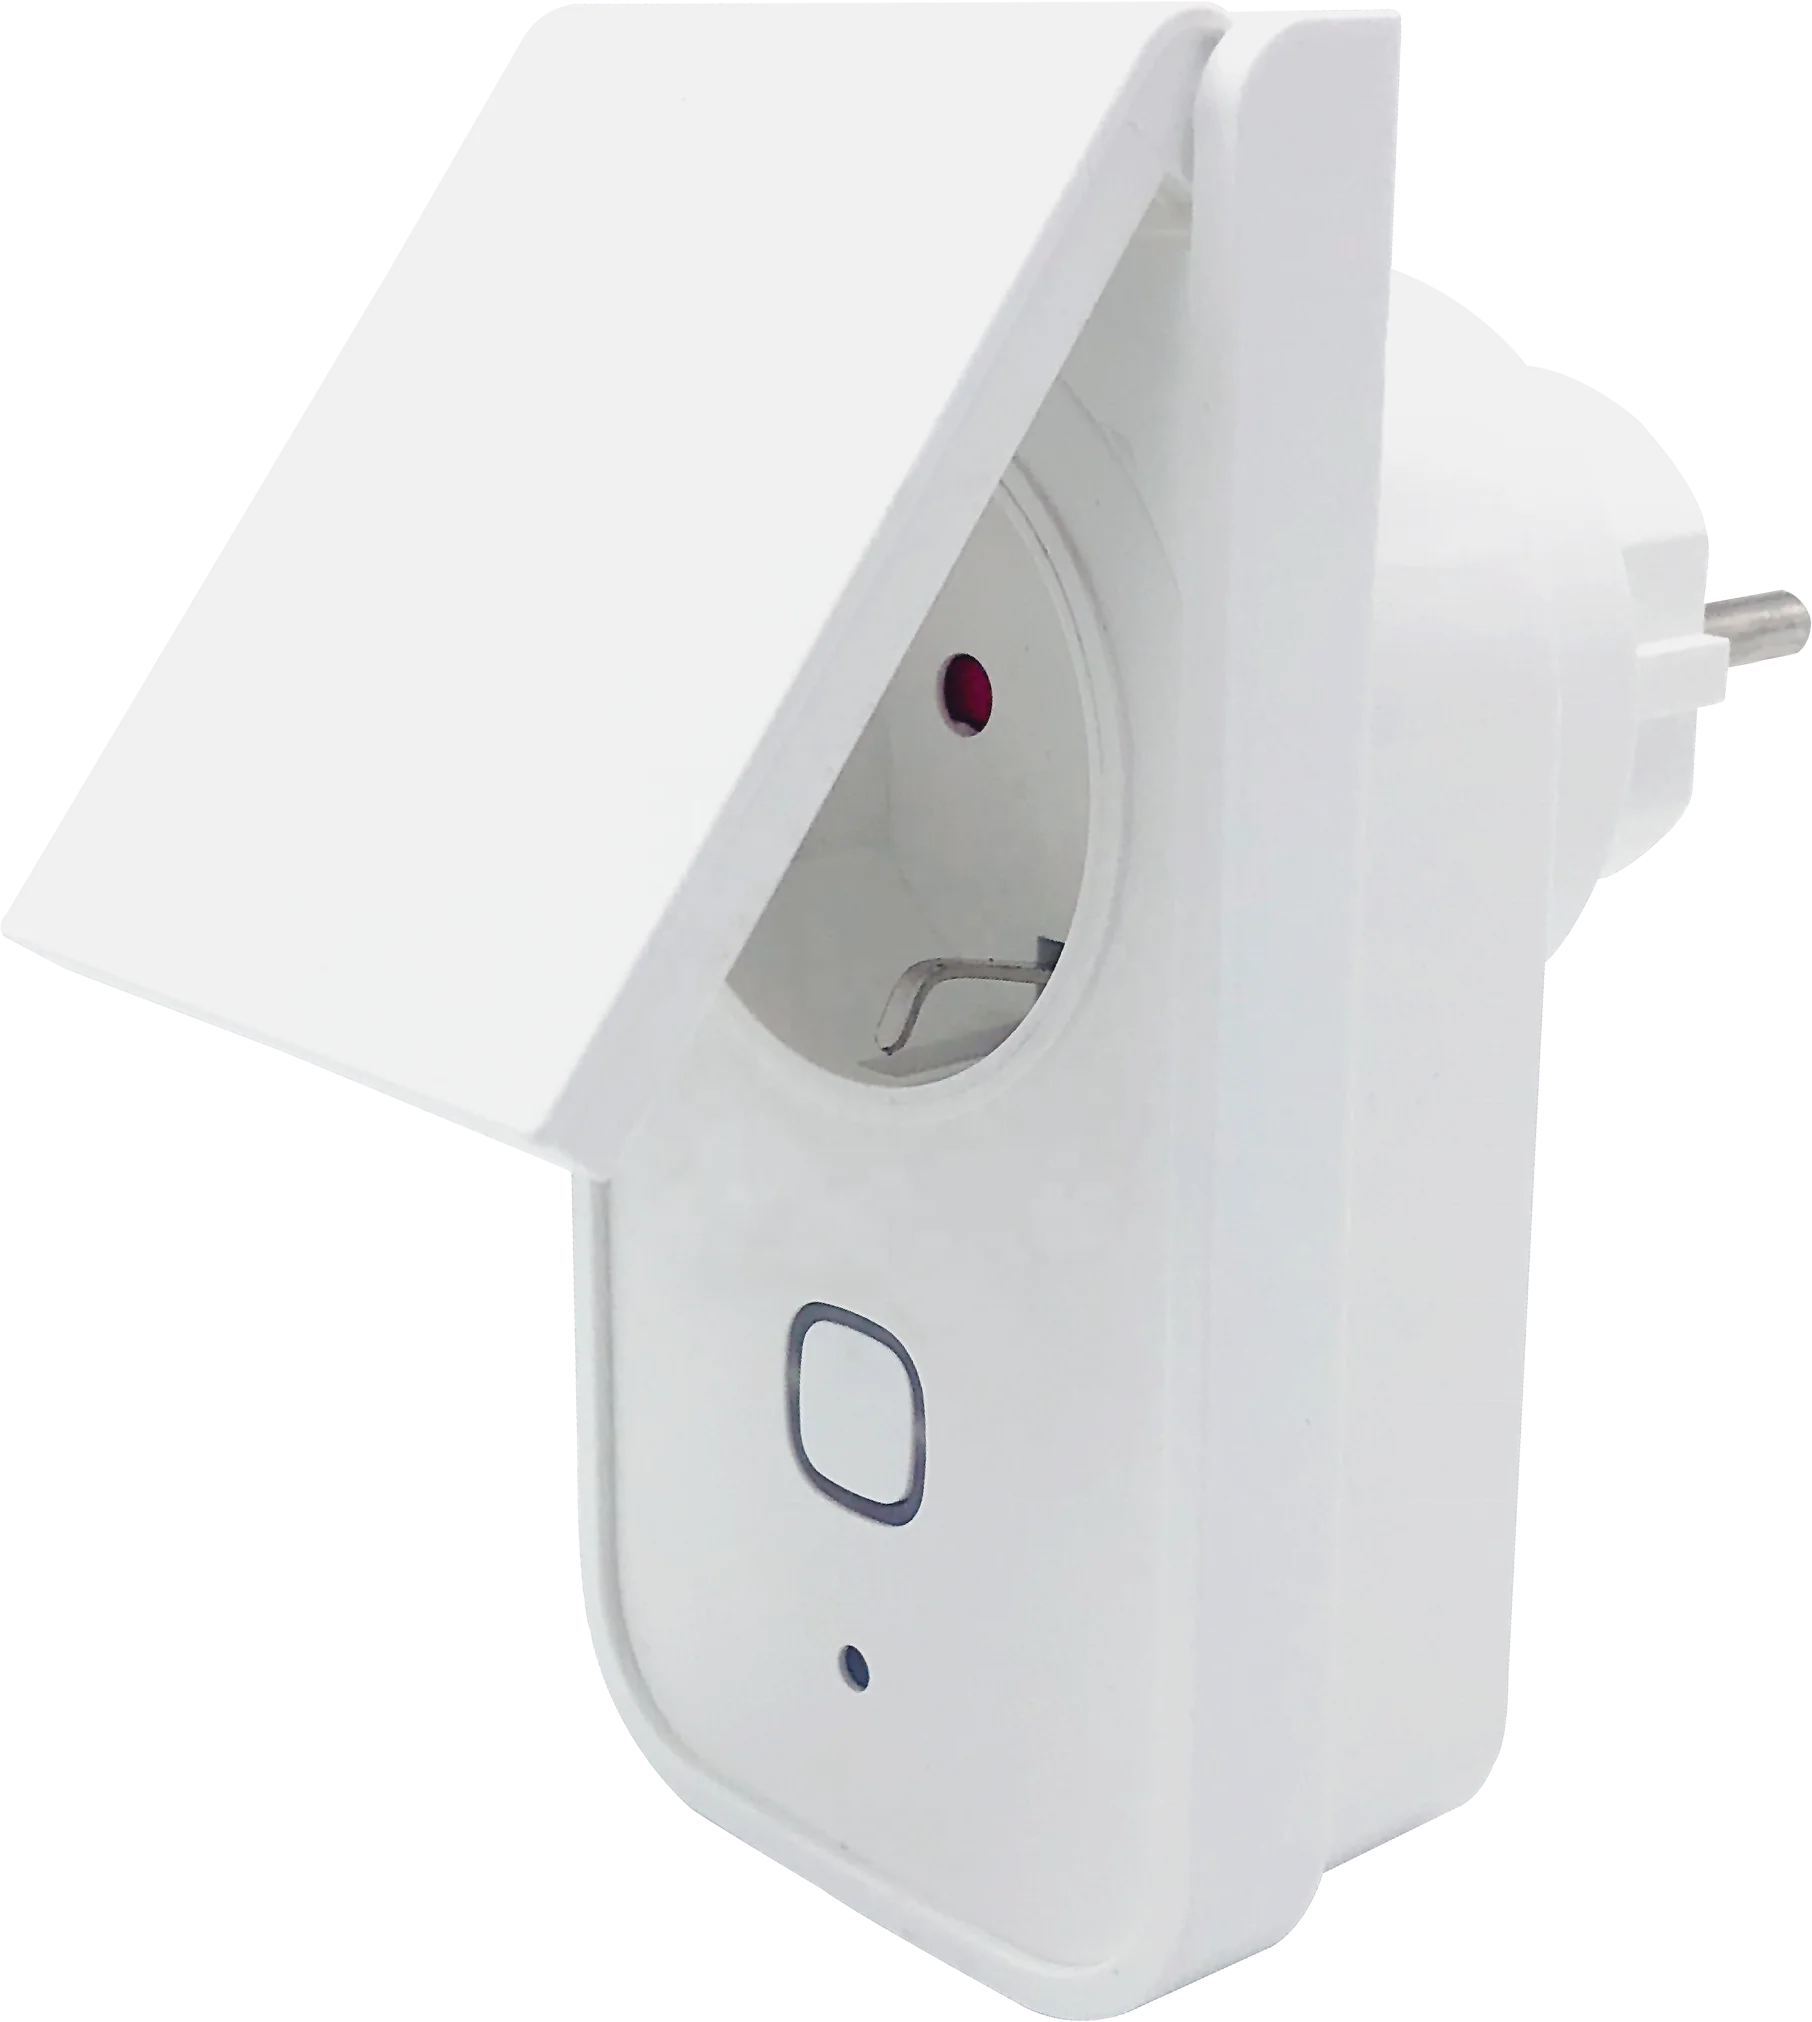 Outdoor Smart Plug Ip44, Smart Waterproof Plug